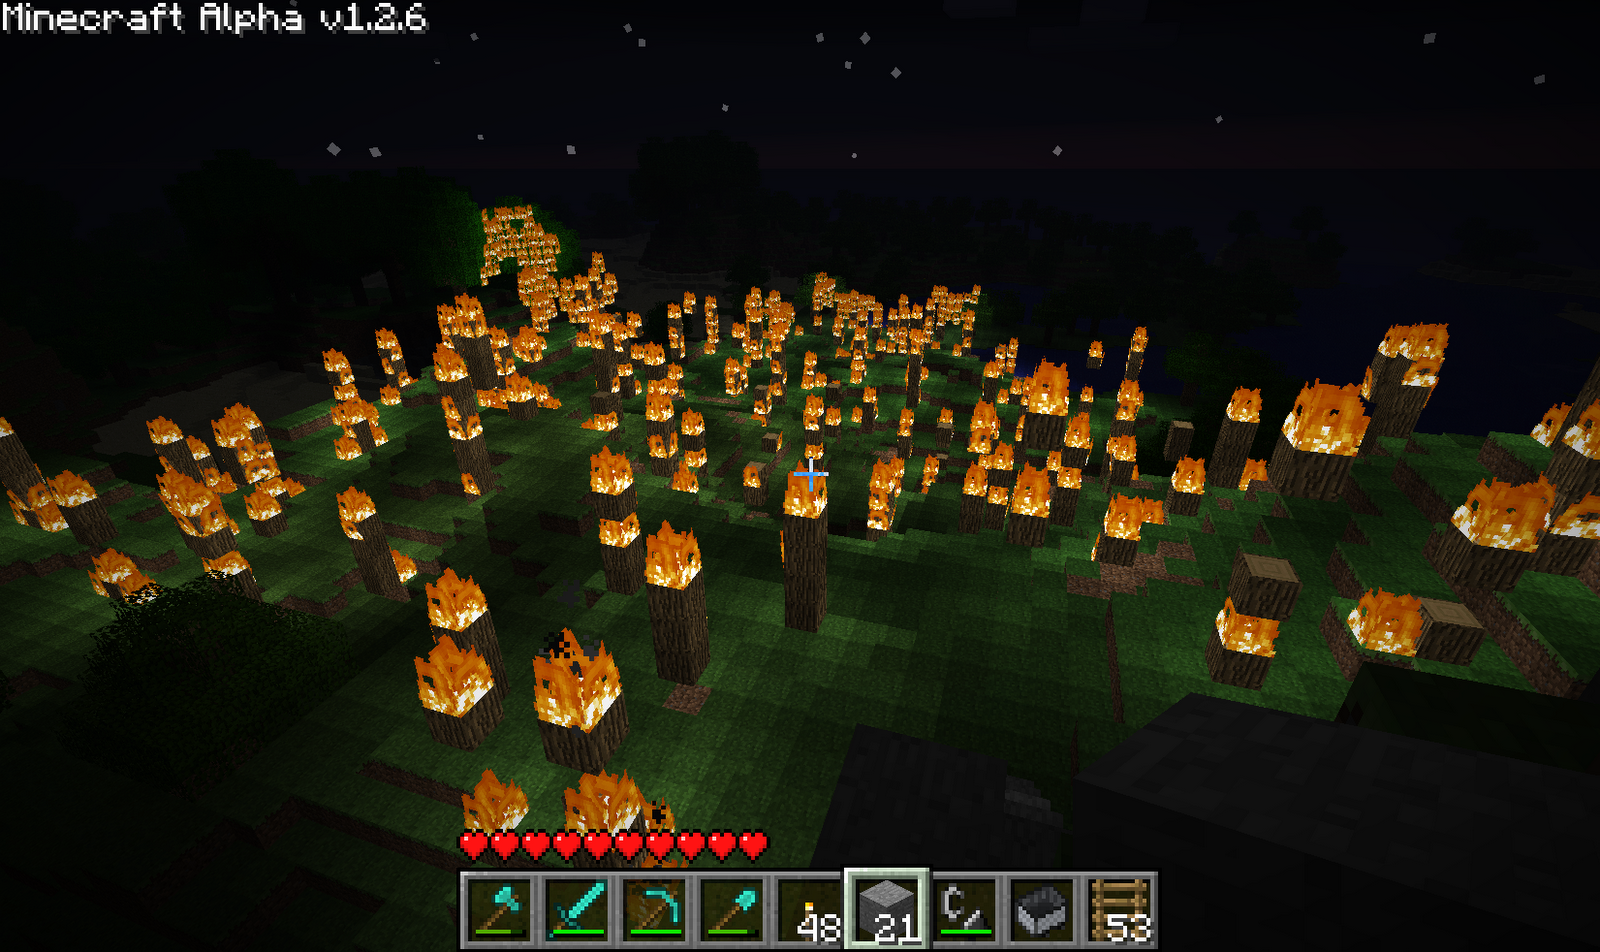 Hořící les